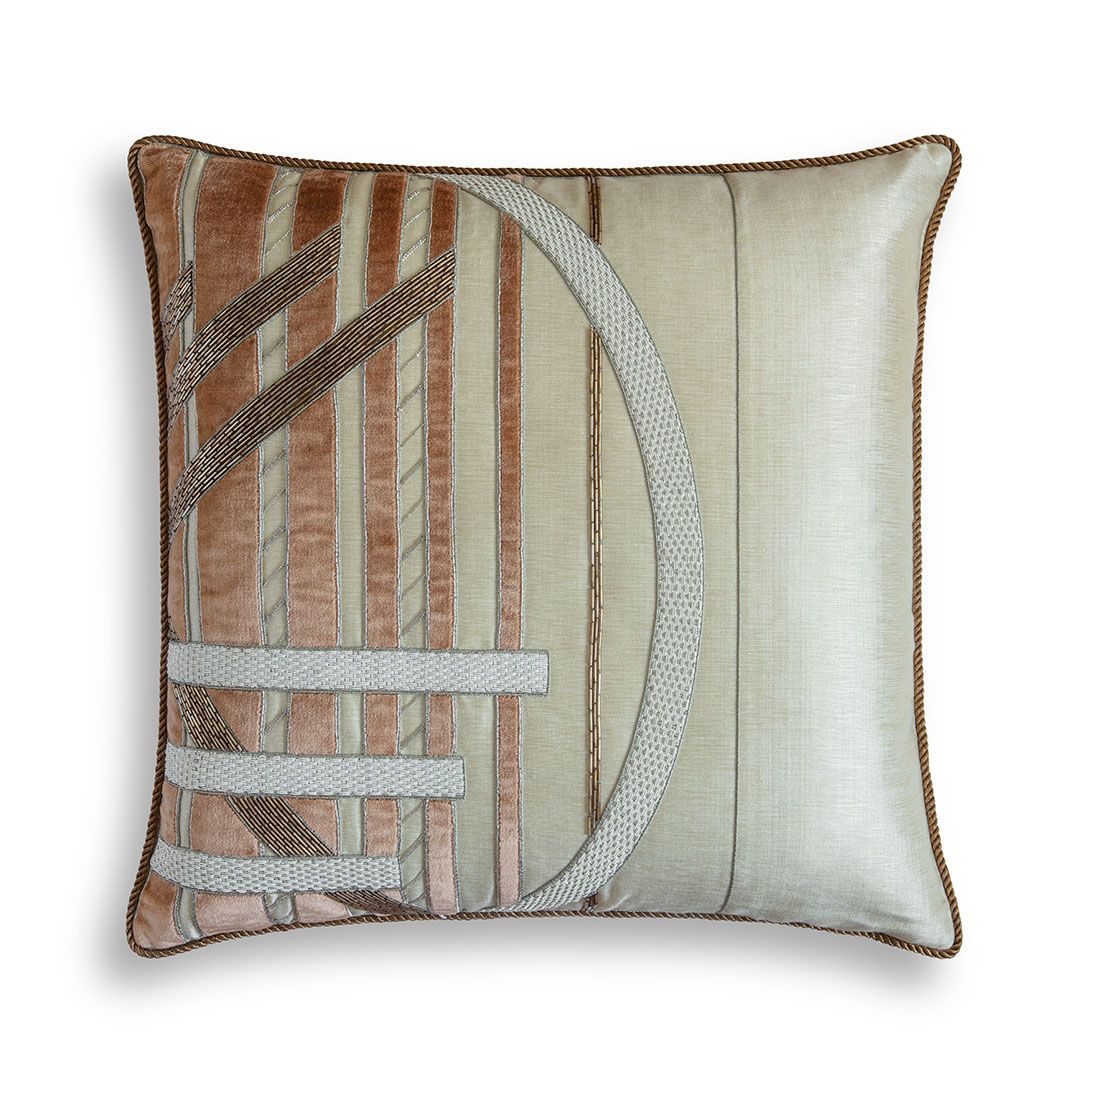 Audrey cushion in Lagan - Light gold with Capri silk velvet - Copper applique - Beaumont & Fletcher